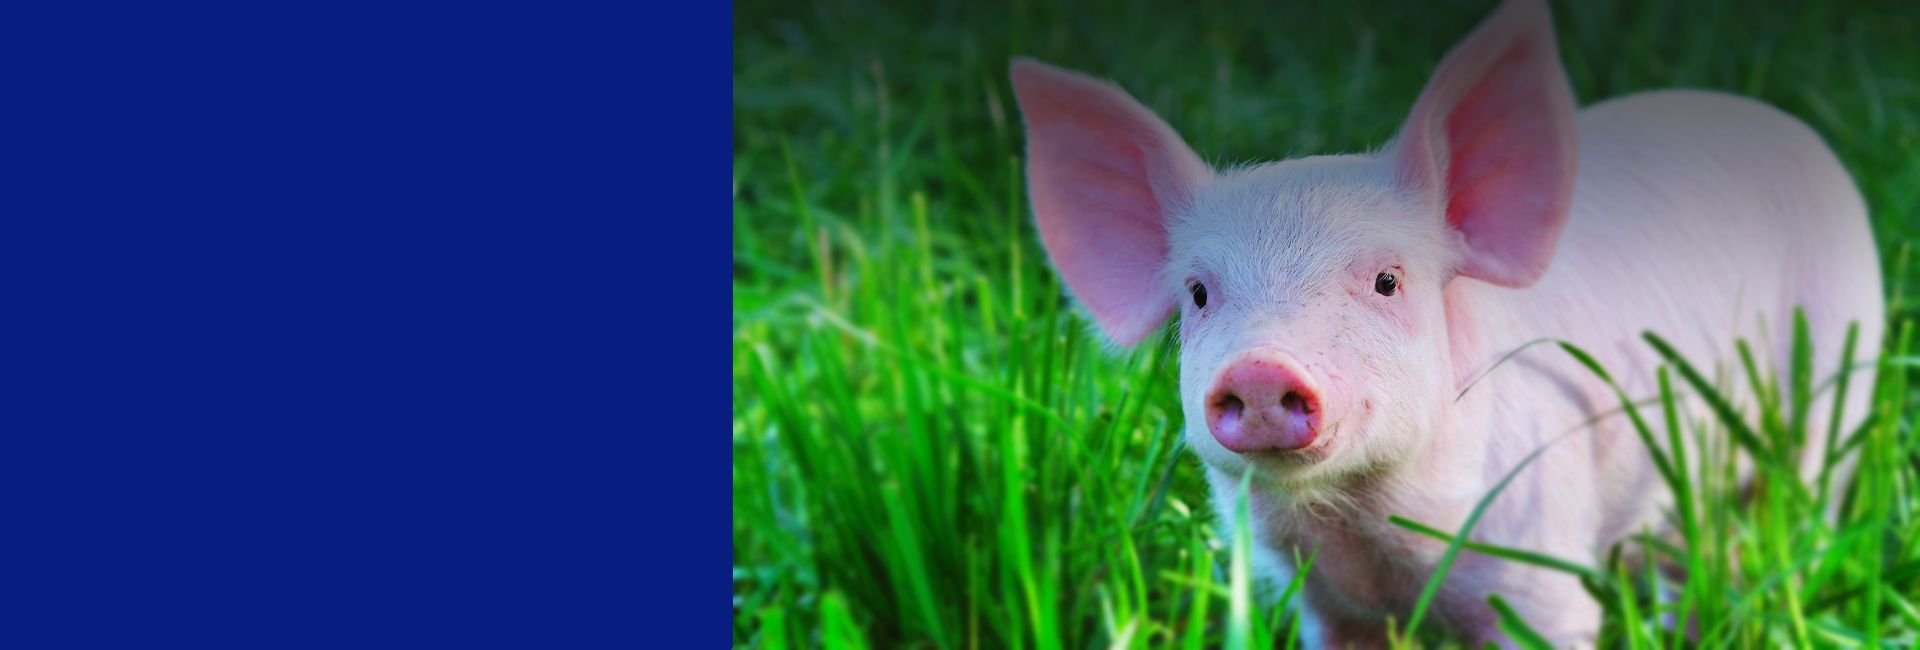 funny pink pig between green grass